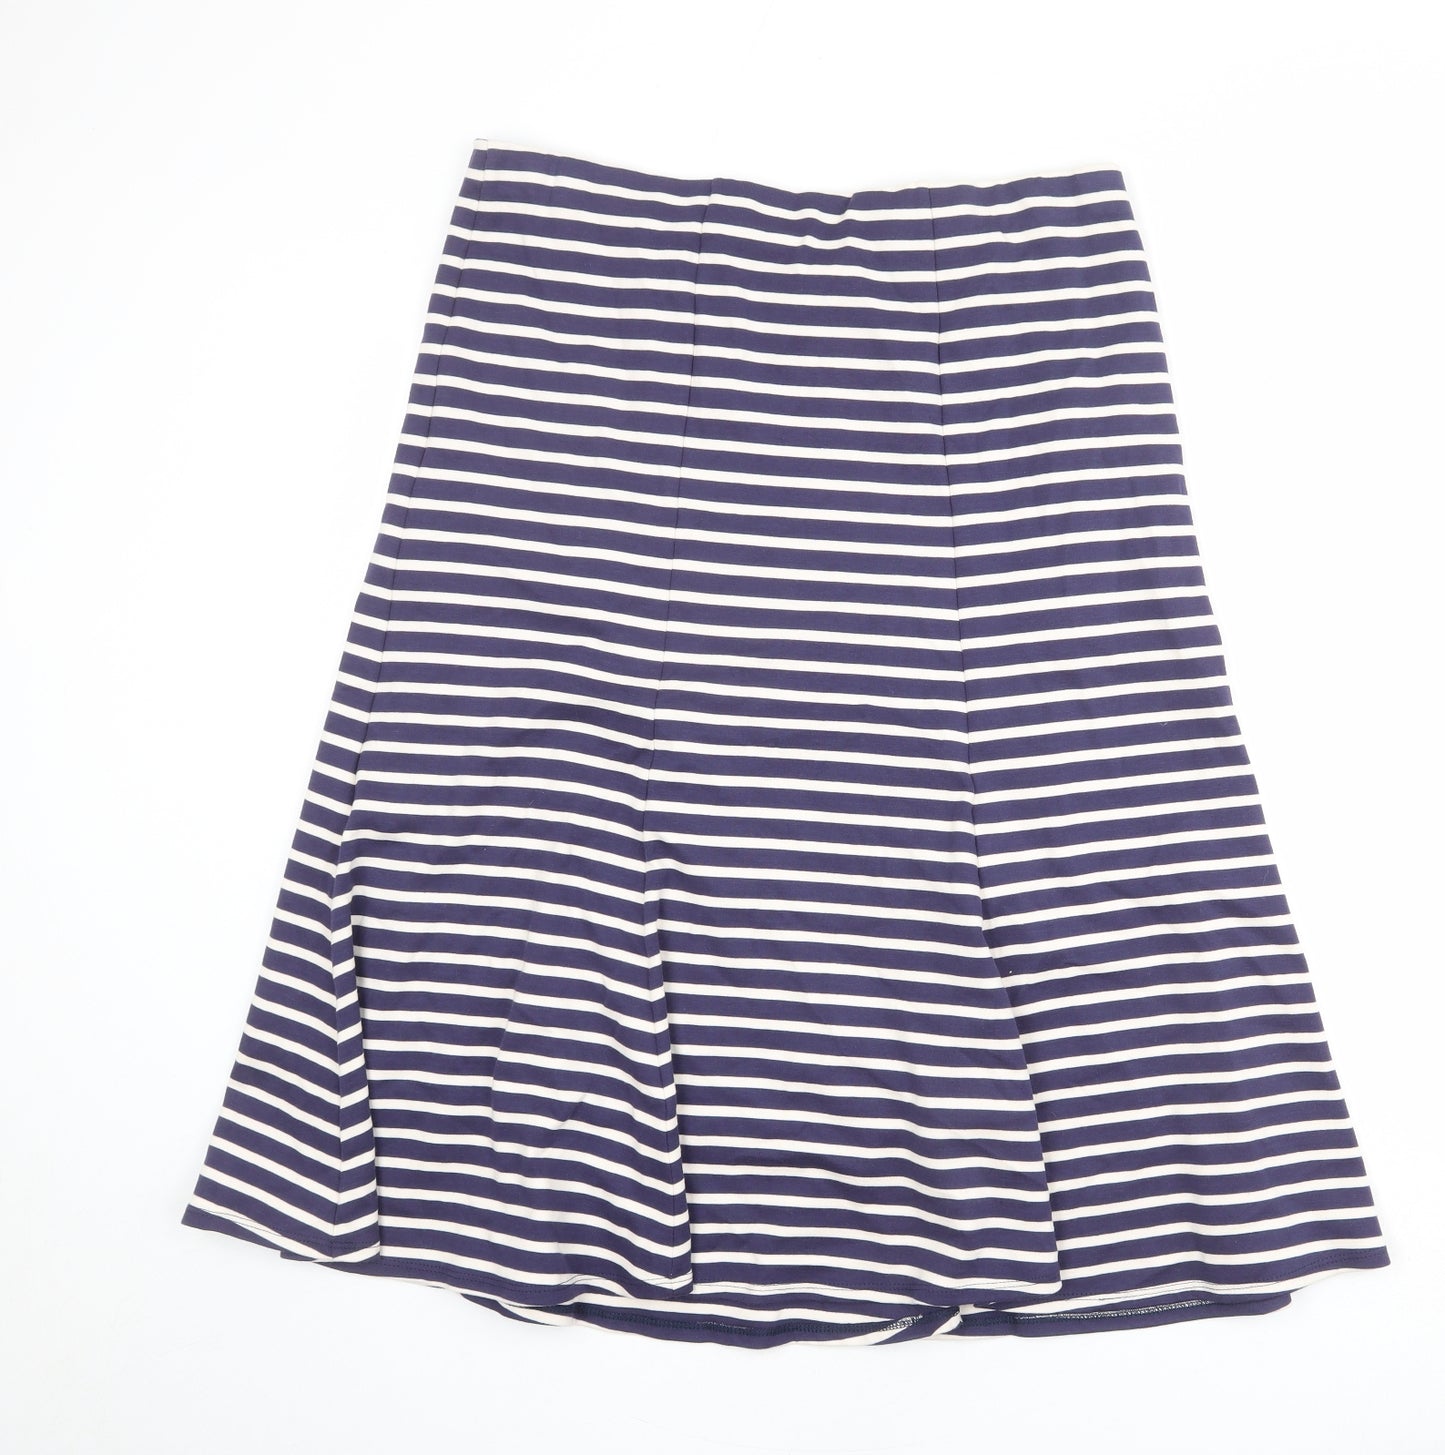 Renaissance Womens Blue Striped Cotton Swing Skirt Size 18